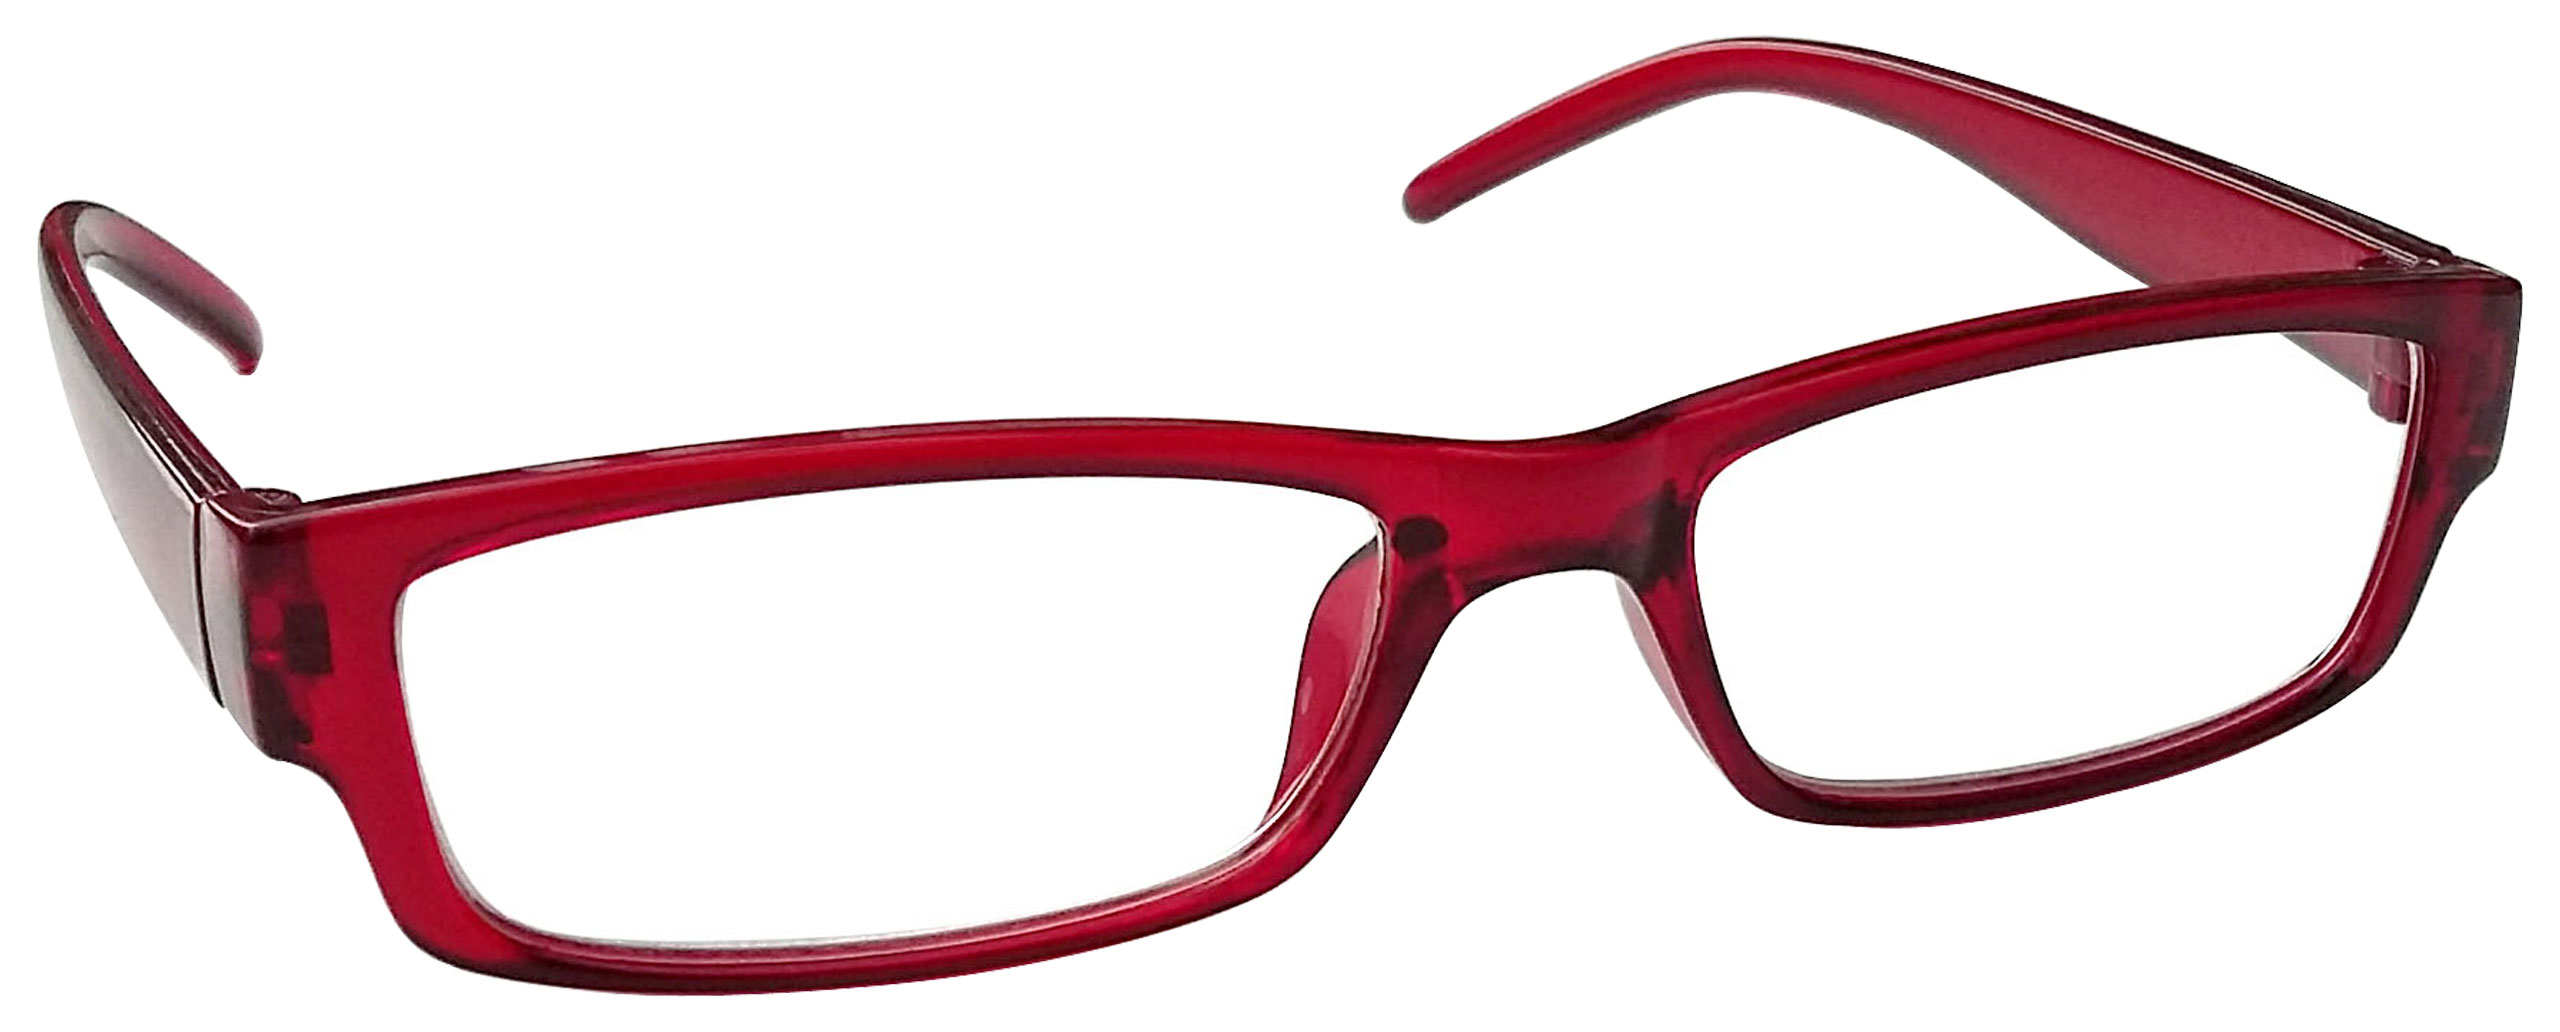 1 00 1 0 Red Reading Glasses Mens Womens Lightweight Designer Style